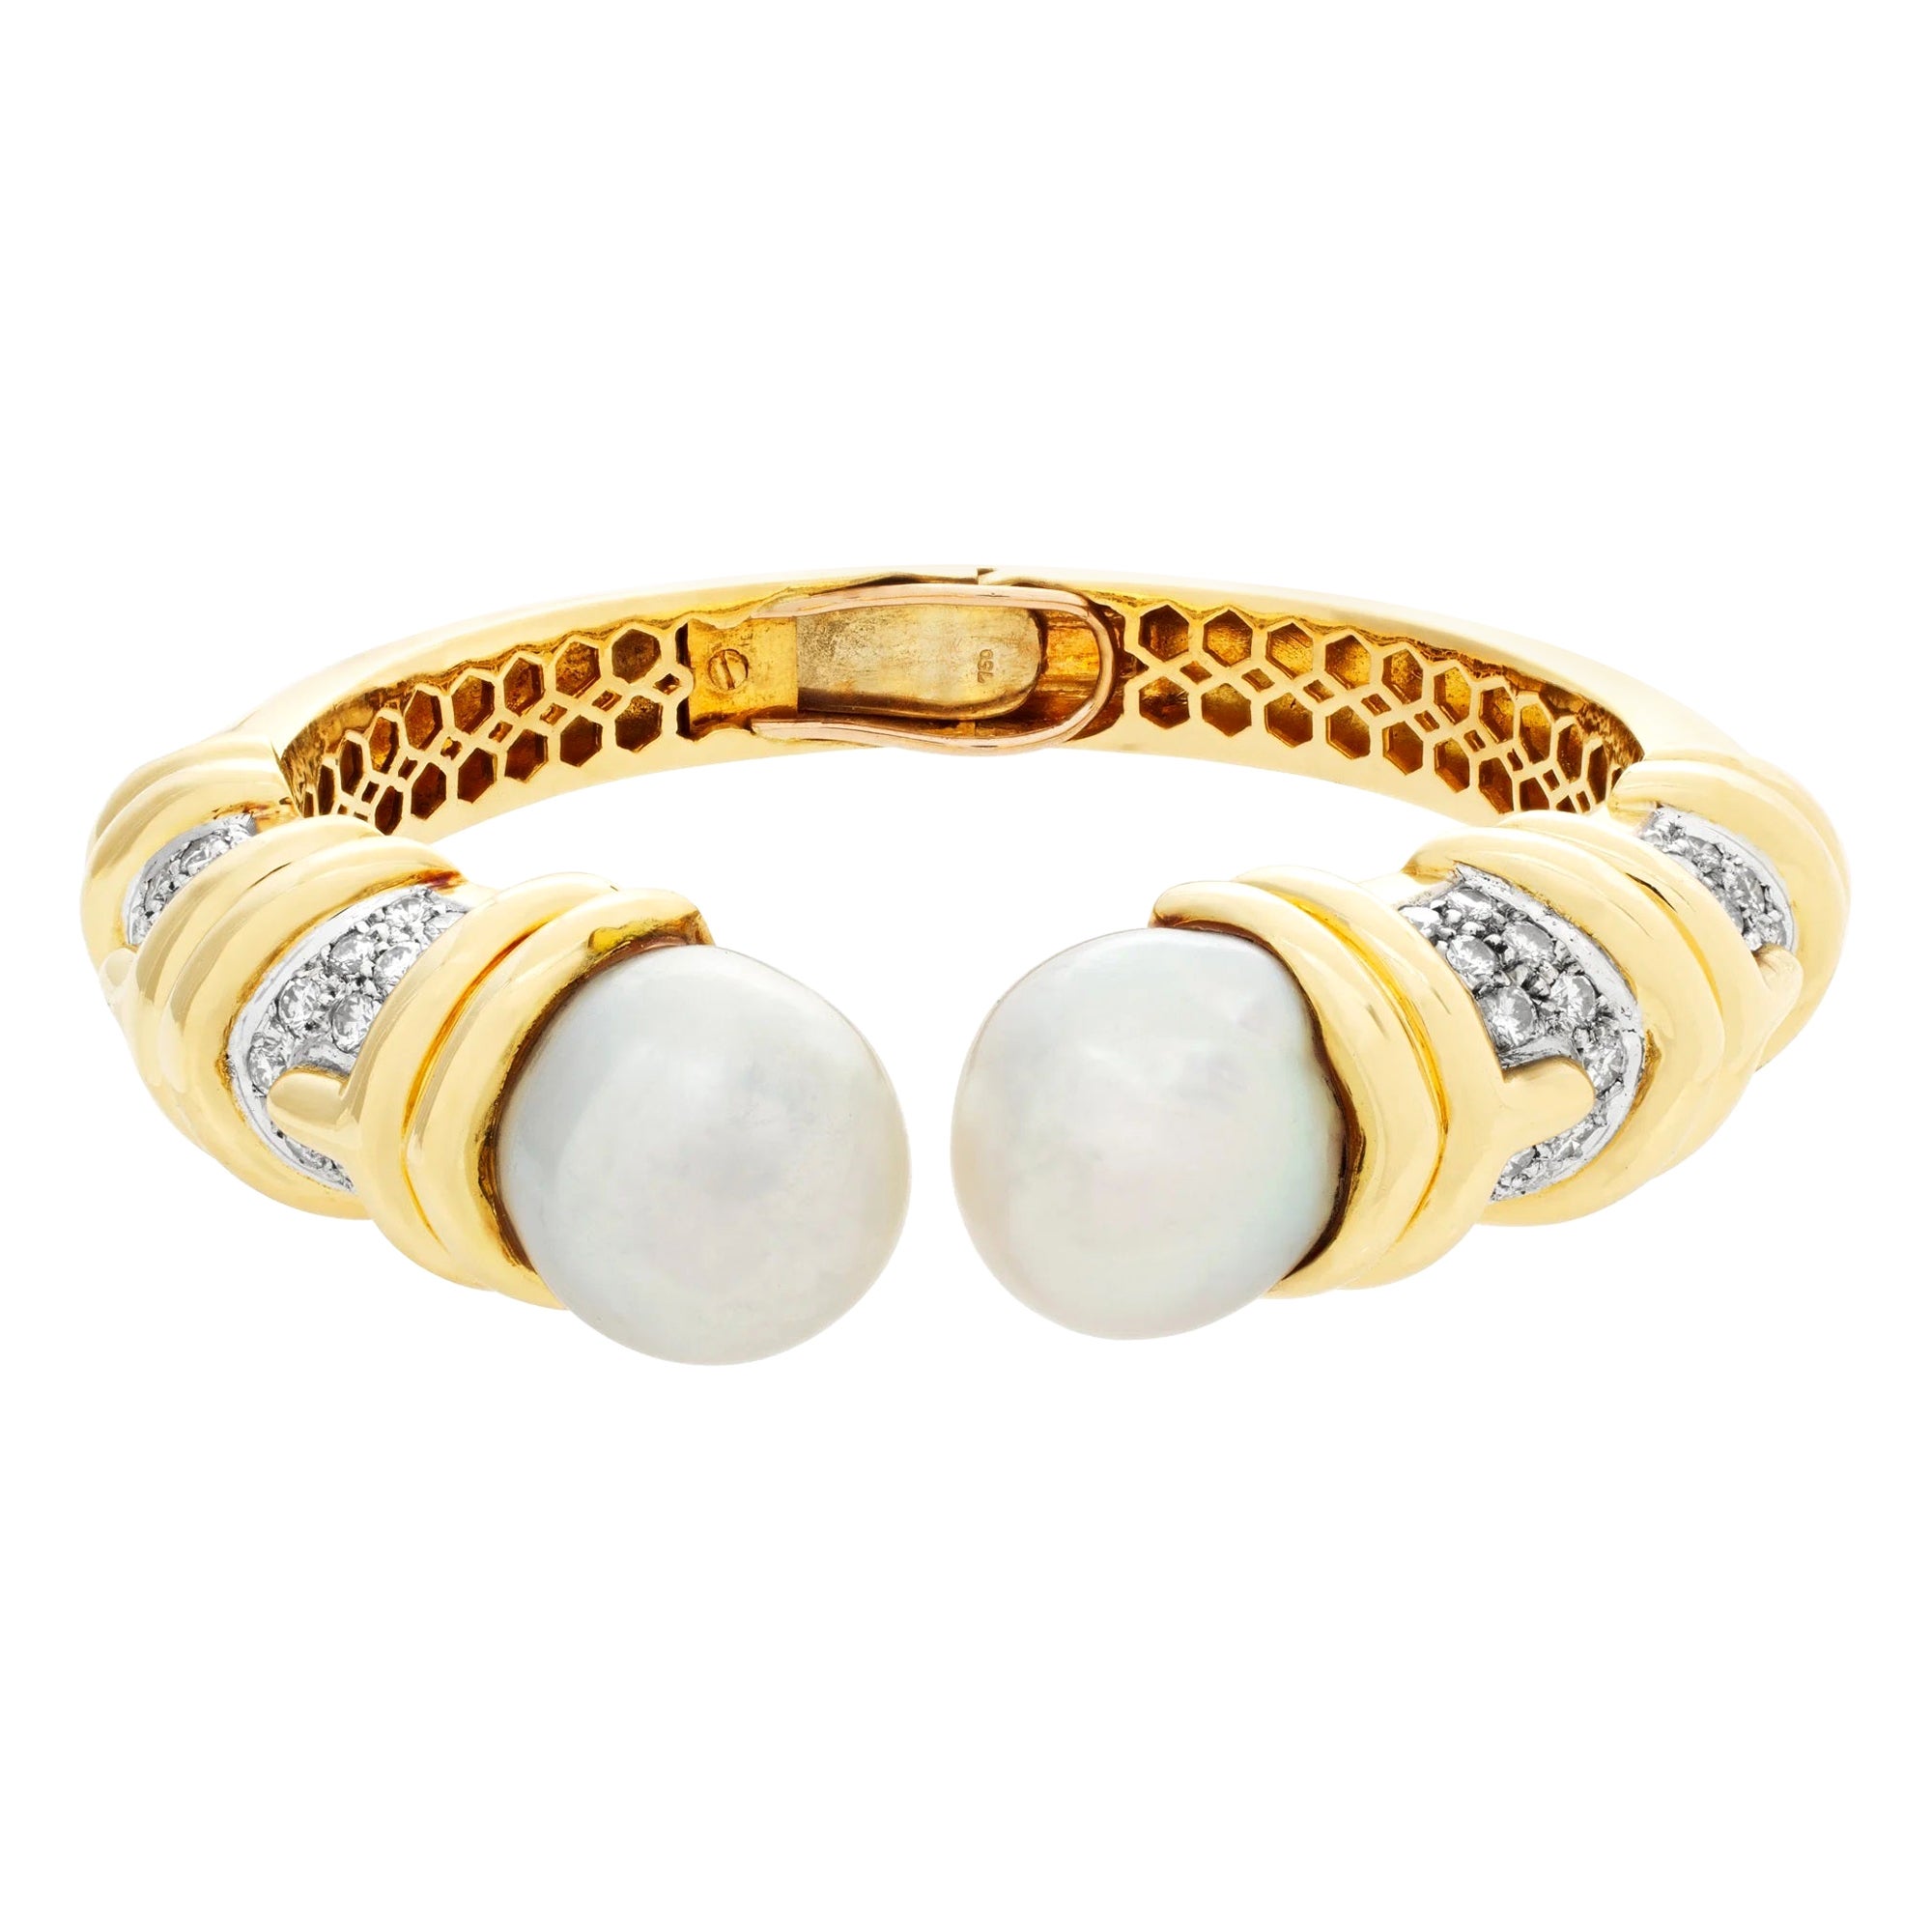 Pearl & Diamonds Hinged Bangle, Set in 18K Yellow & White Gold